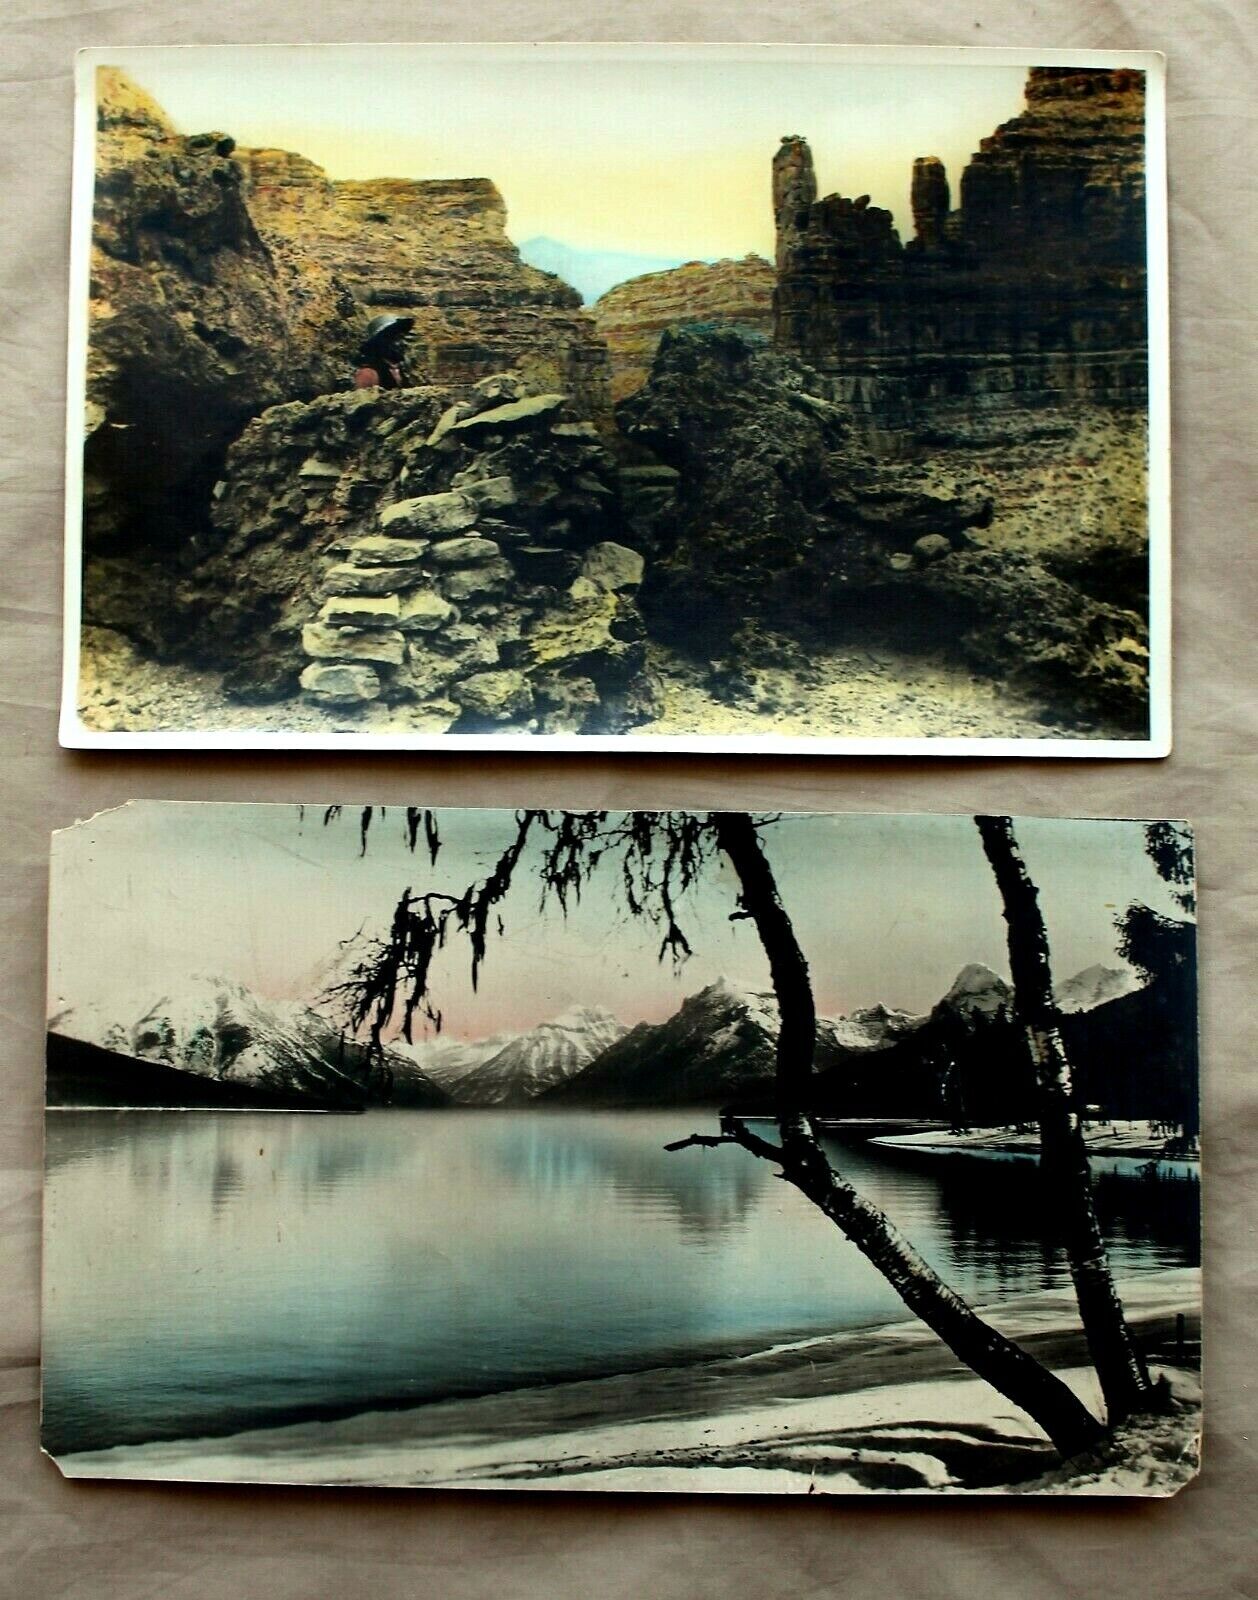 2 Antique Tinted Western Photos (Cataract Canyon AZ, Lake McDonald, MT) c. 1915